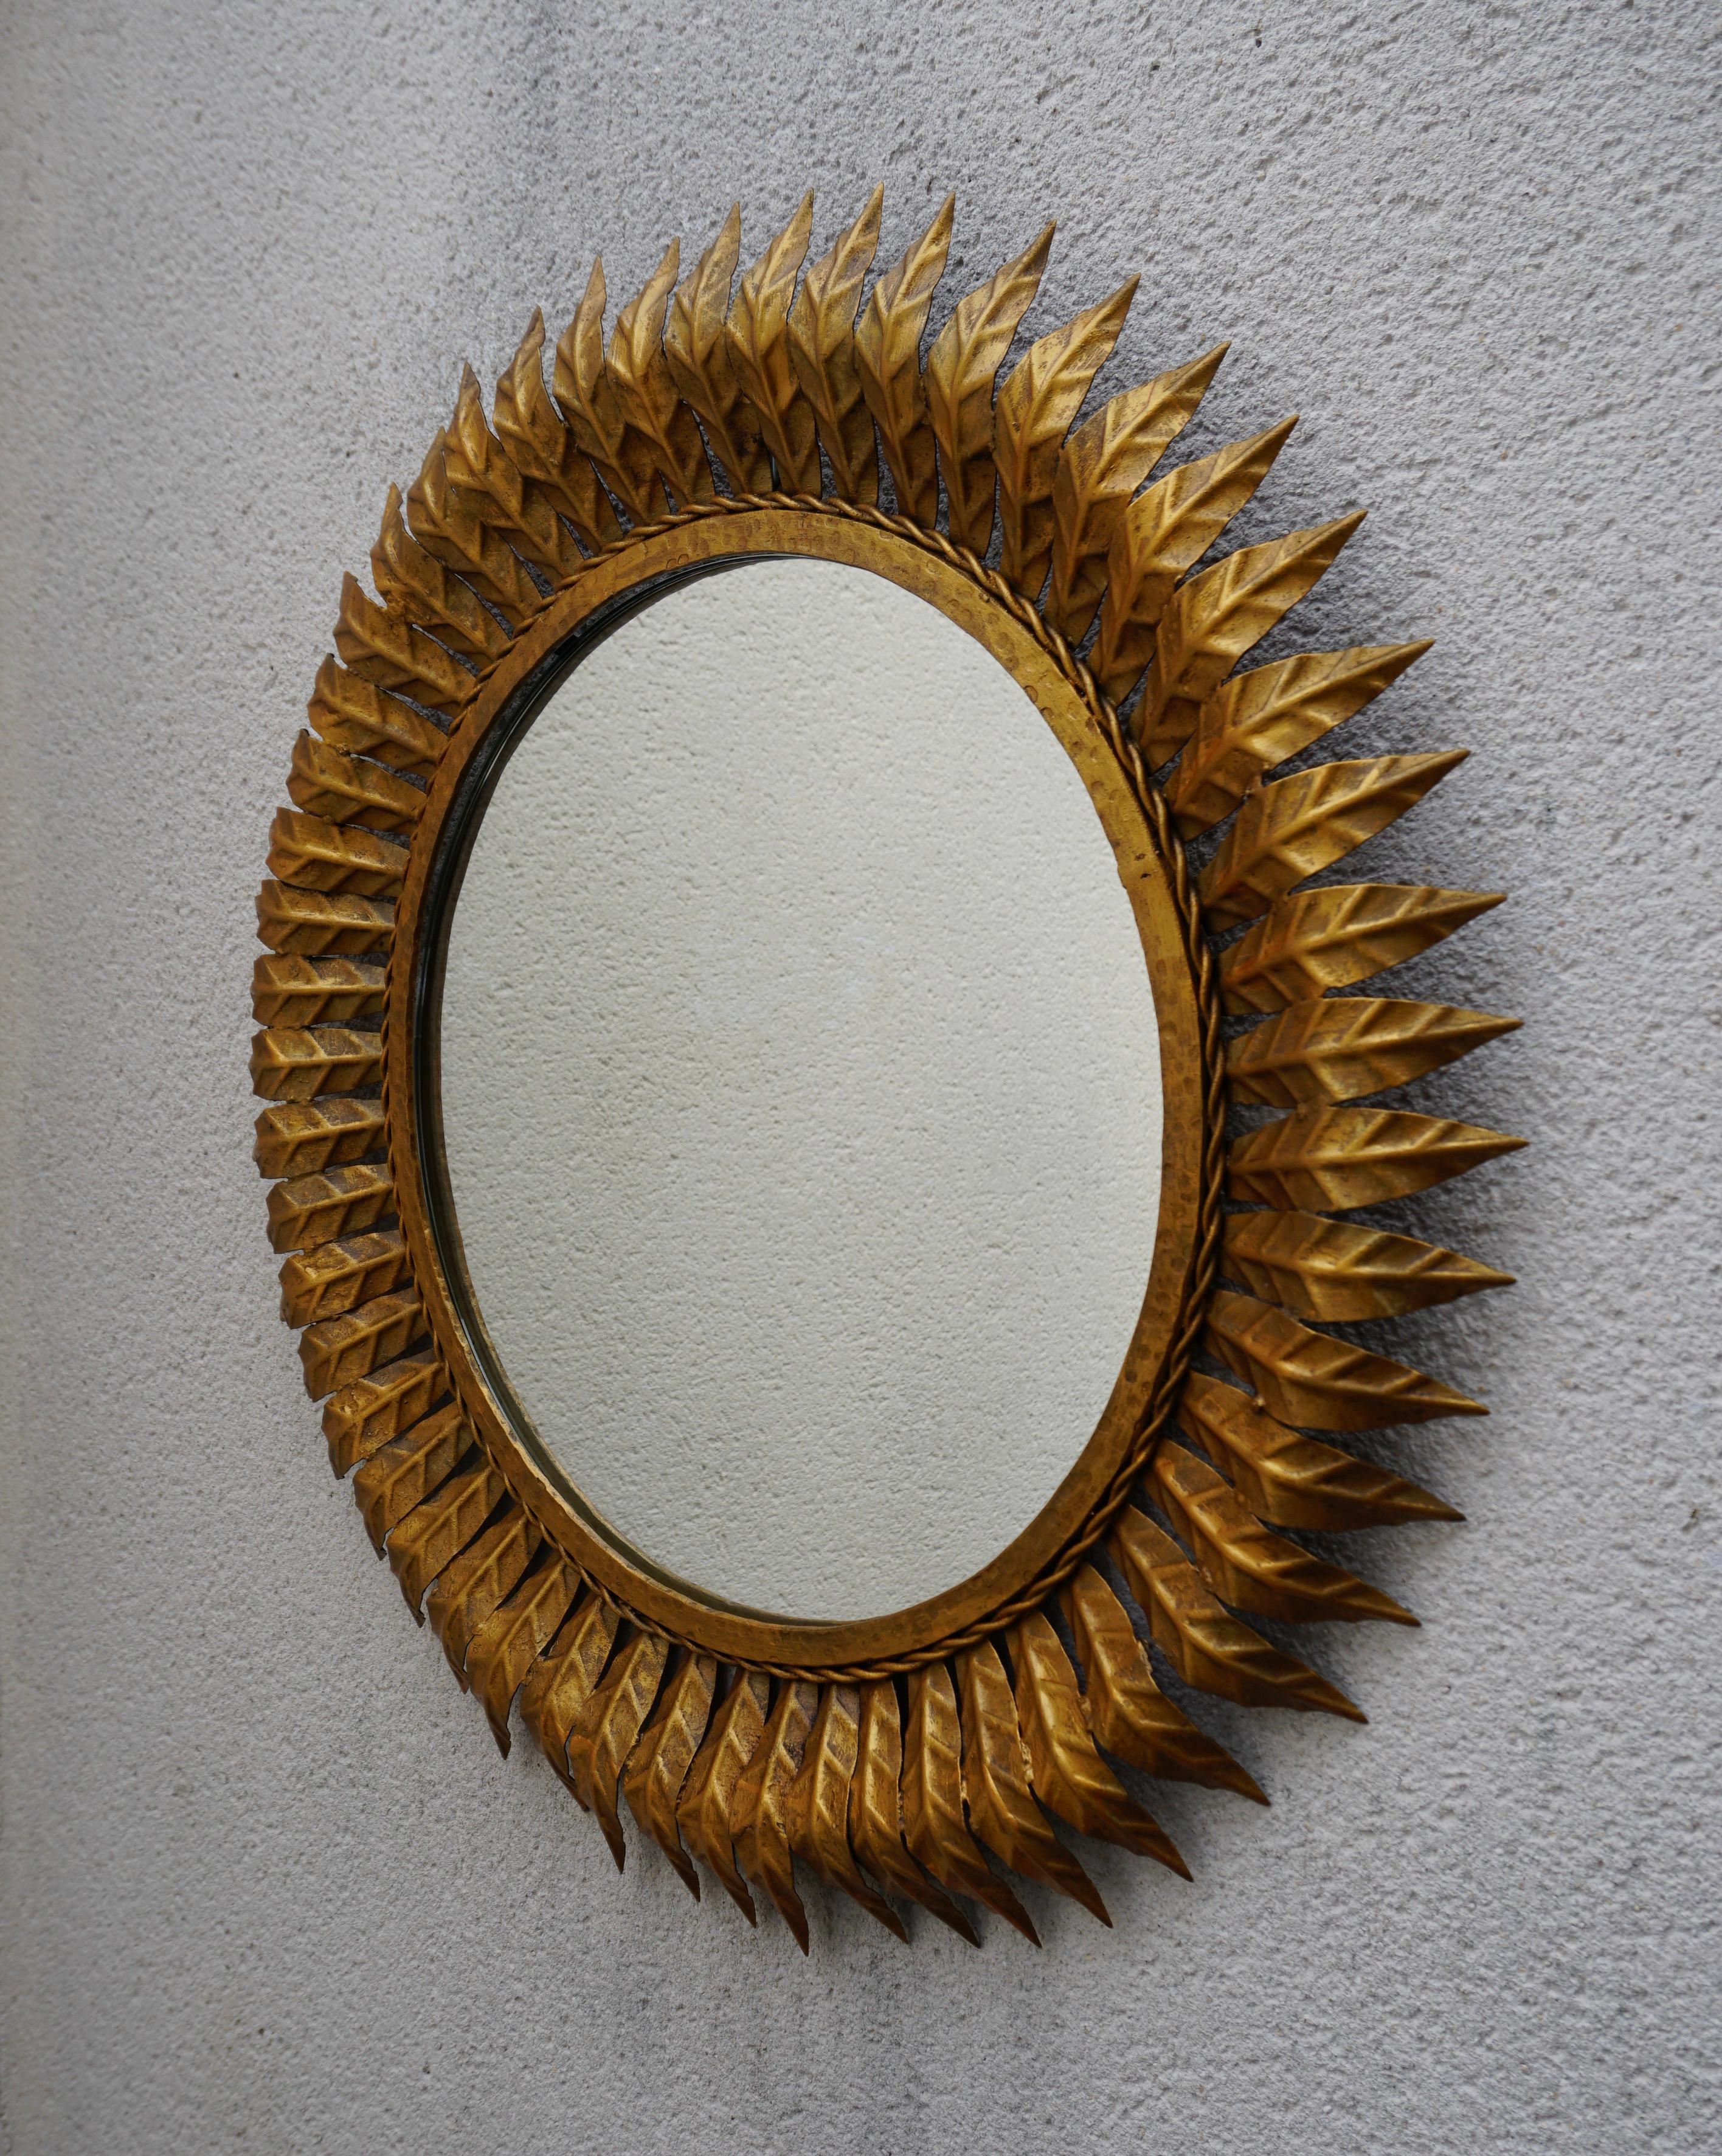 A striking vintage mirror in Regency style. The mirror is 24